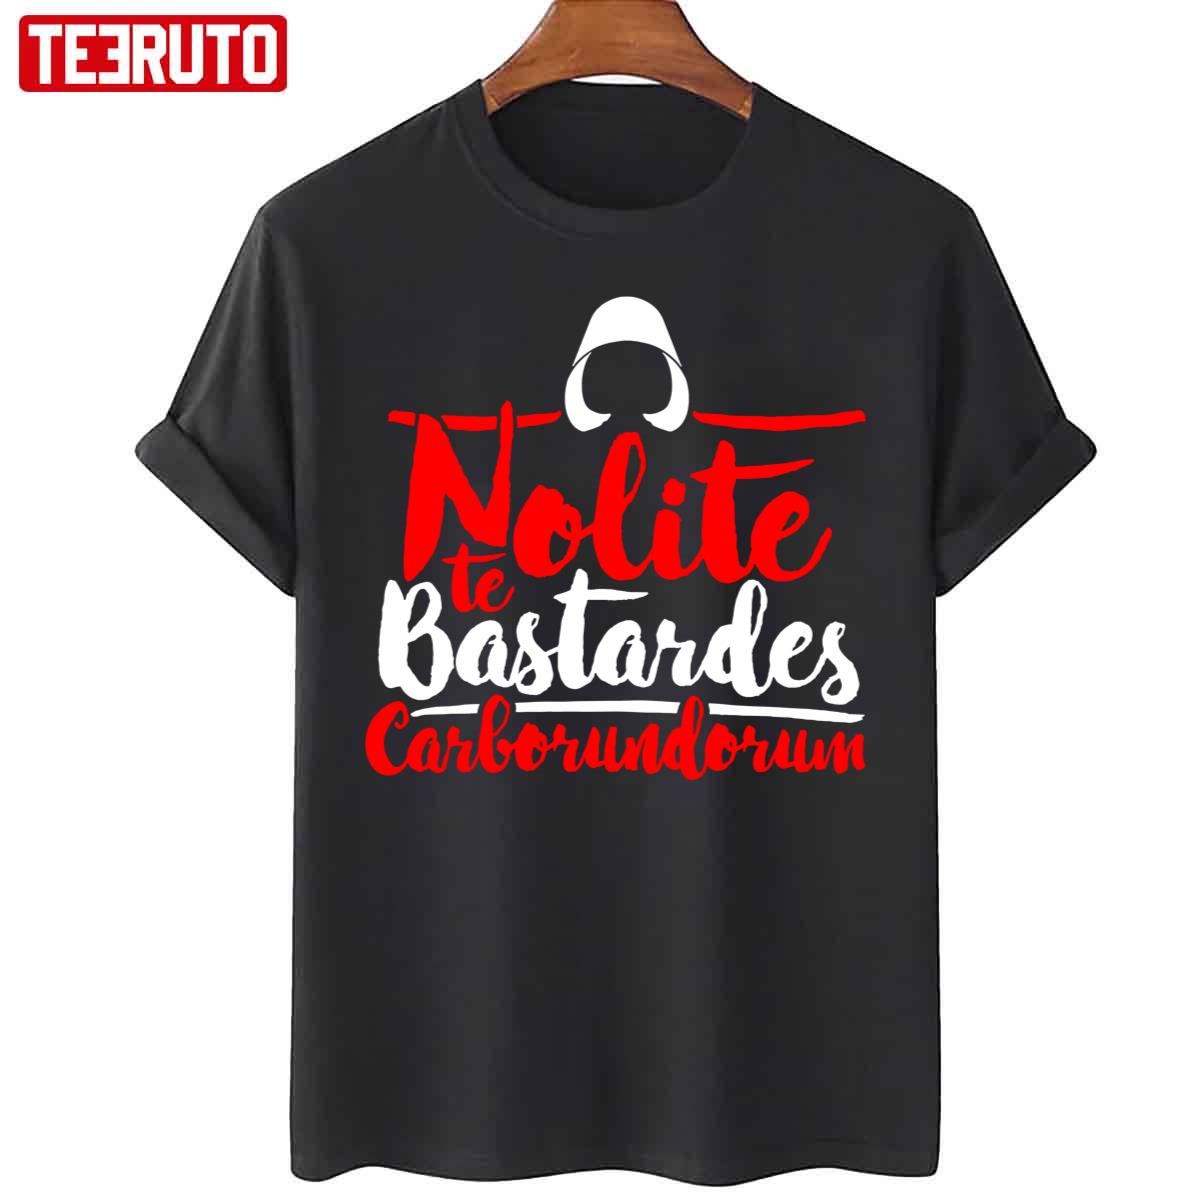 Nolite Te Bastardes Carborundorum The Handmaids Tale Unisex T-Shirt